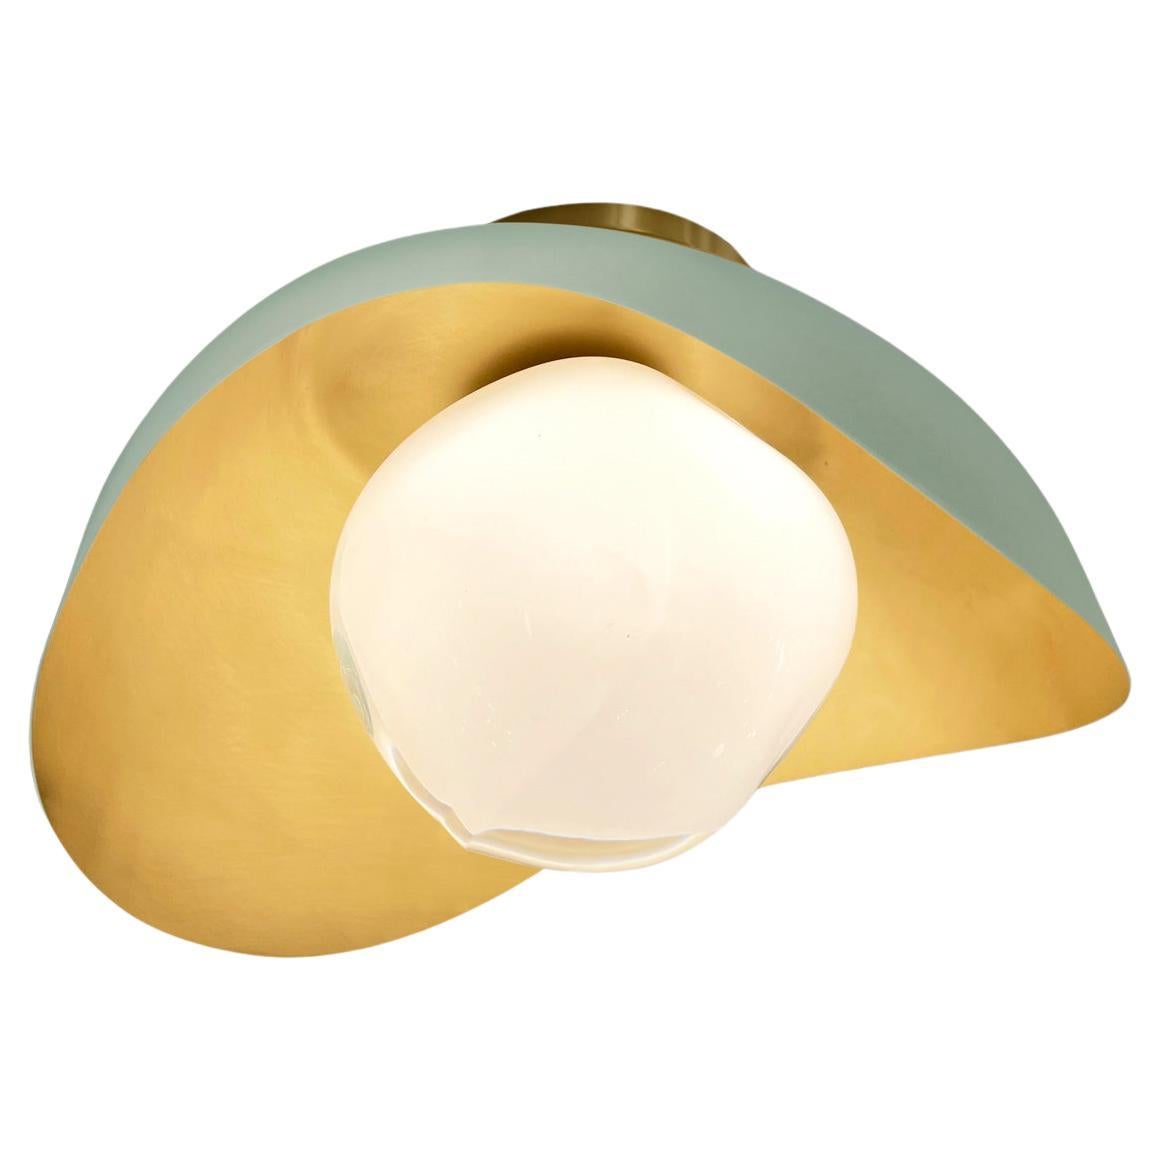 Perla Flushmount Ceiling Light by Gaspare Asaro-Satin Brass/Acqua Finish For Sale